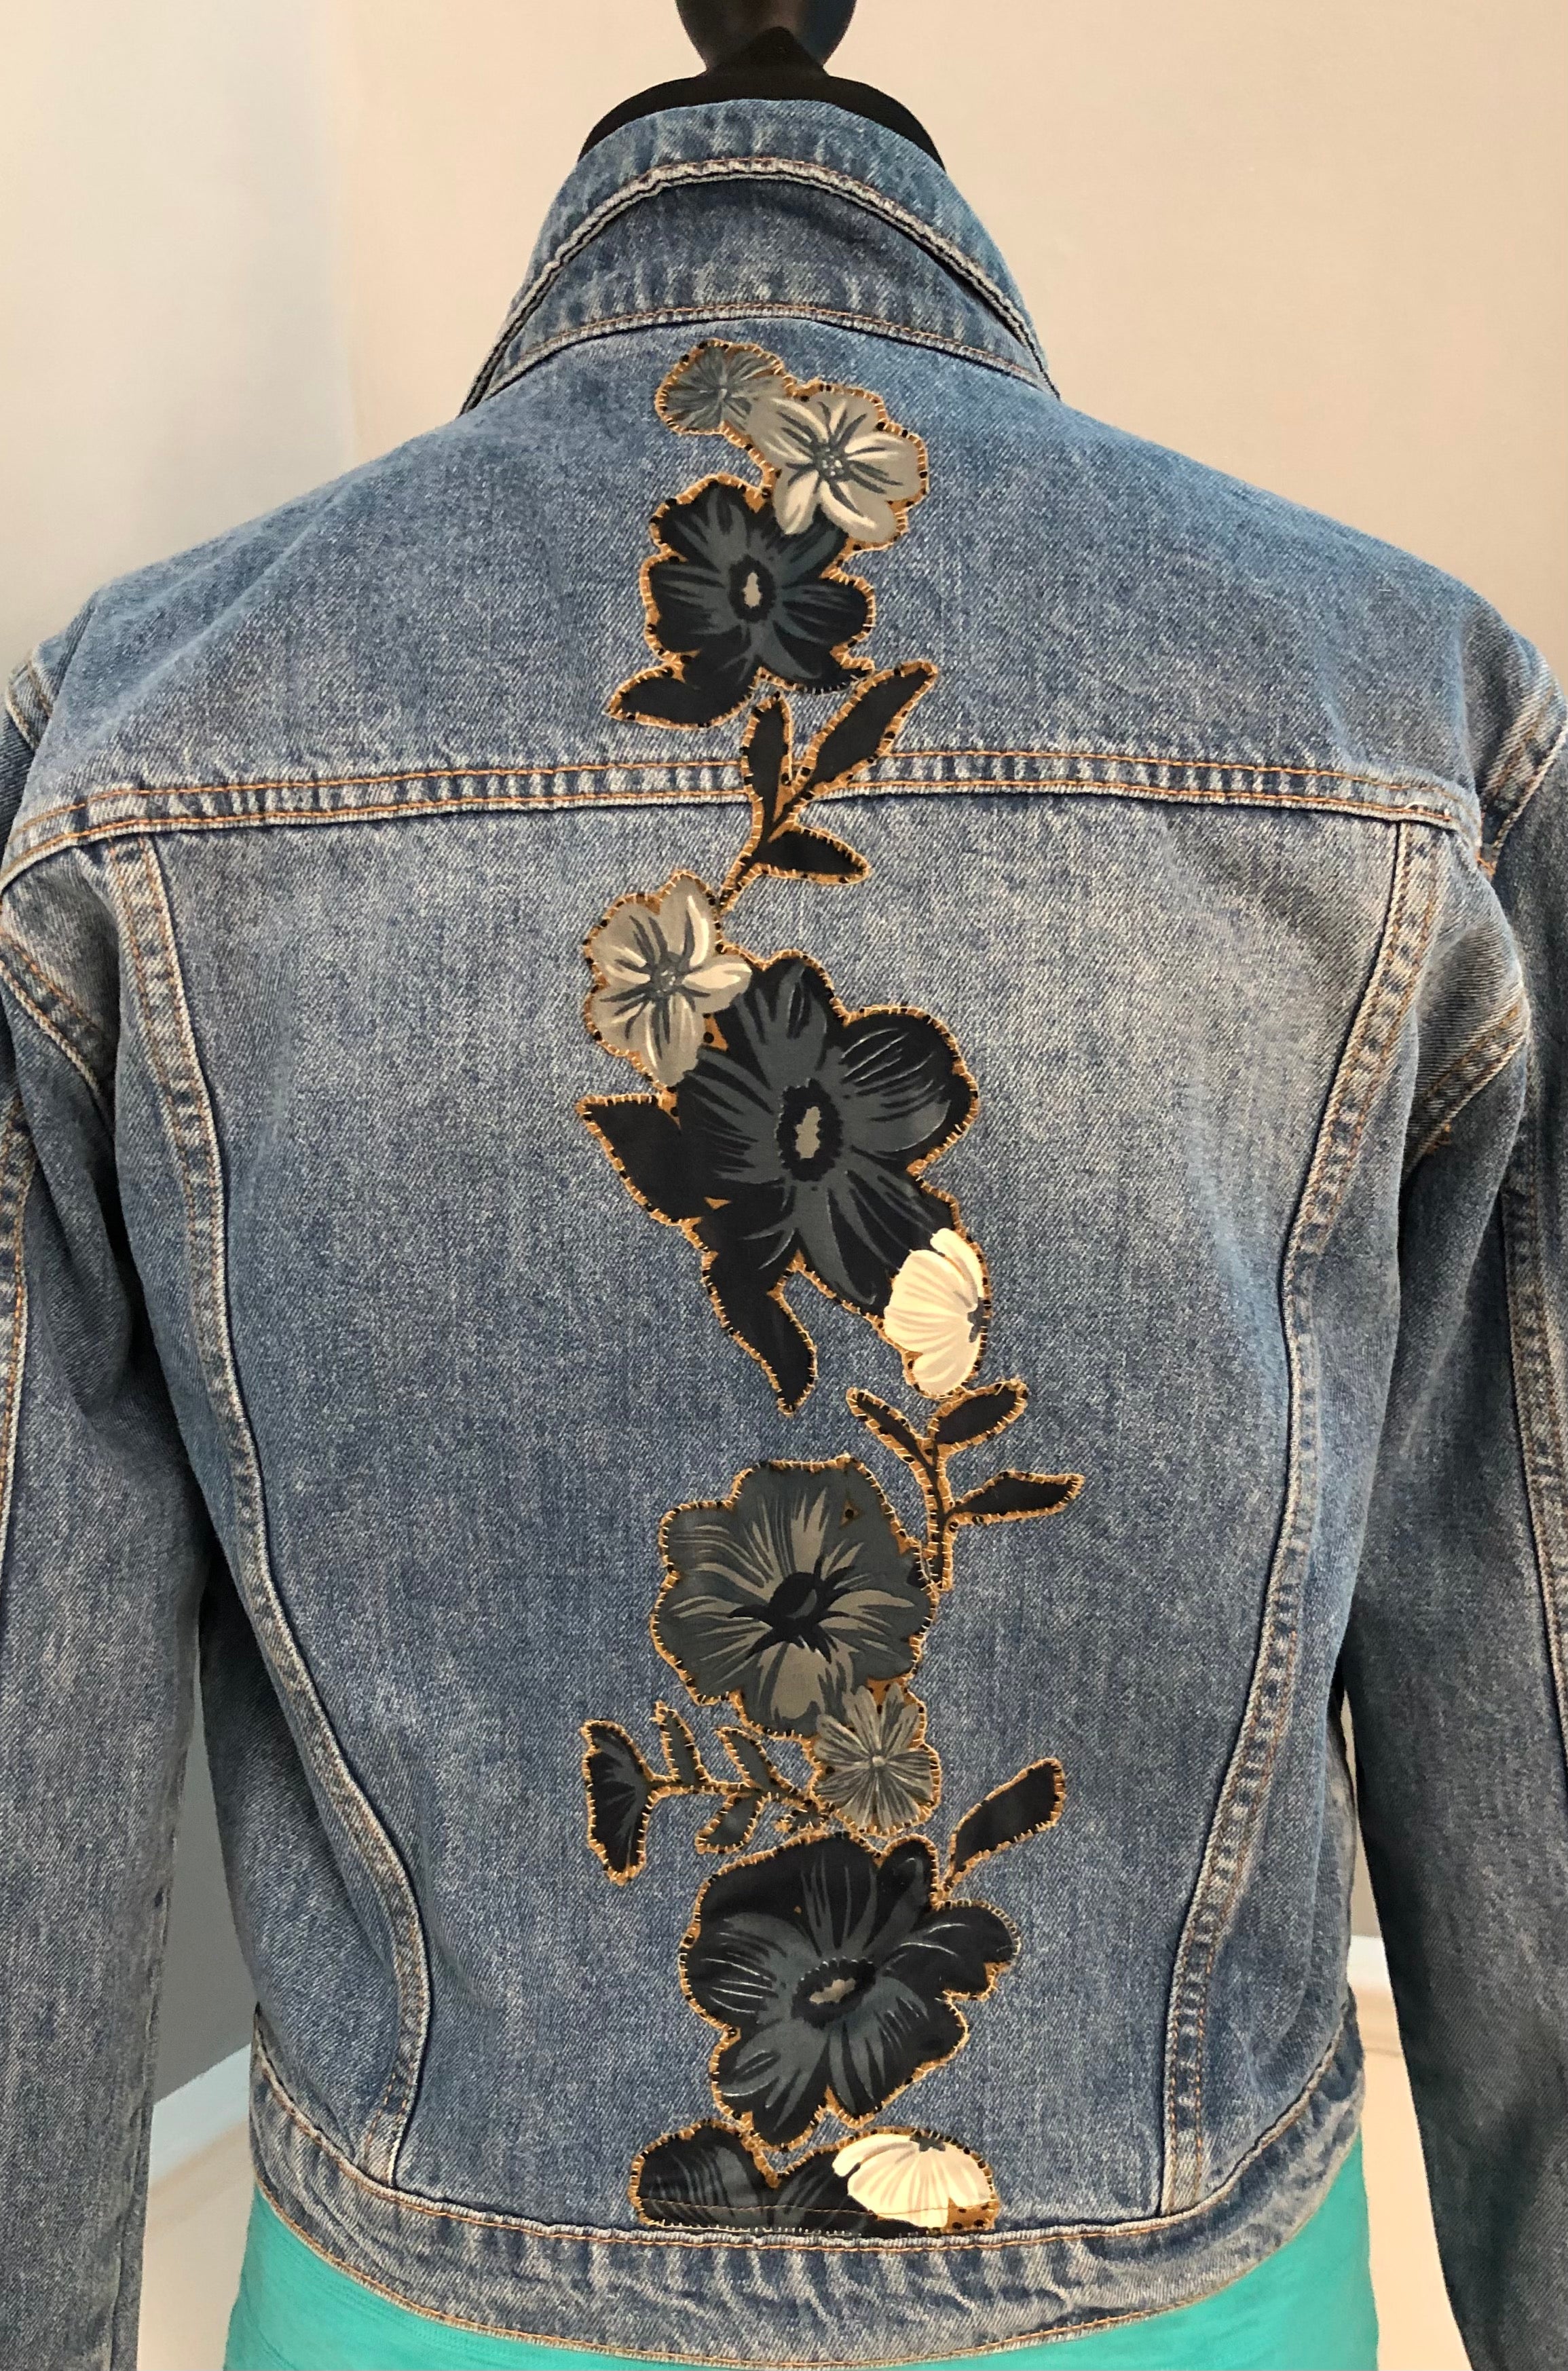 Re-Styled Denim Jacket by Trish (Floral satin appliqué)